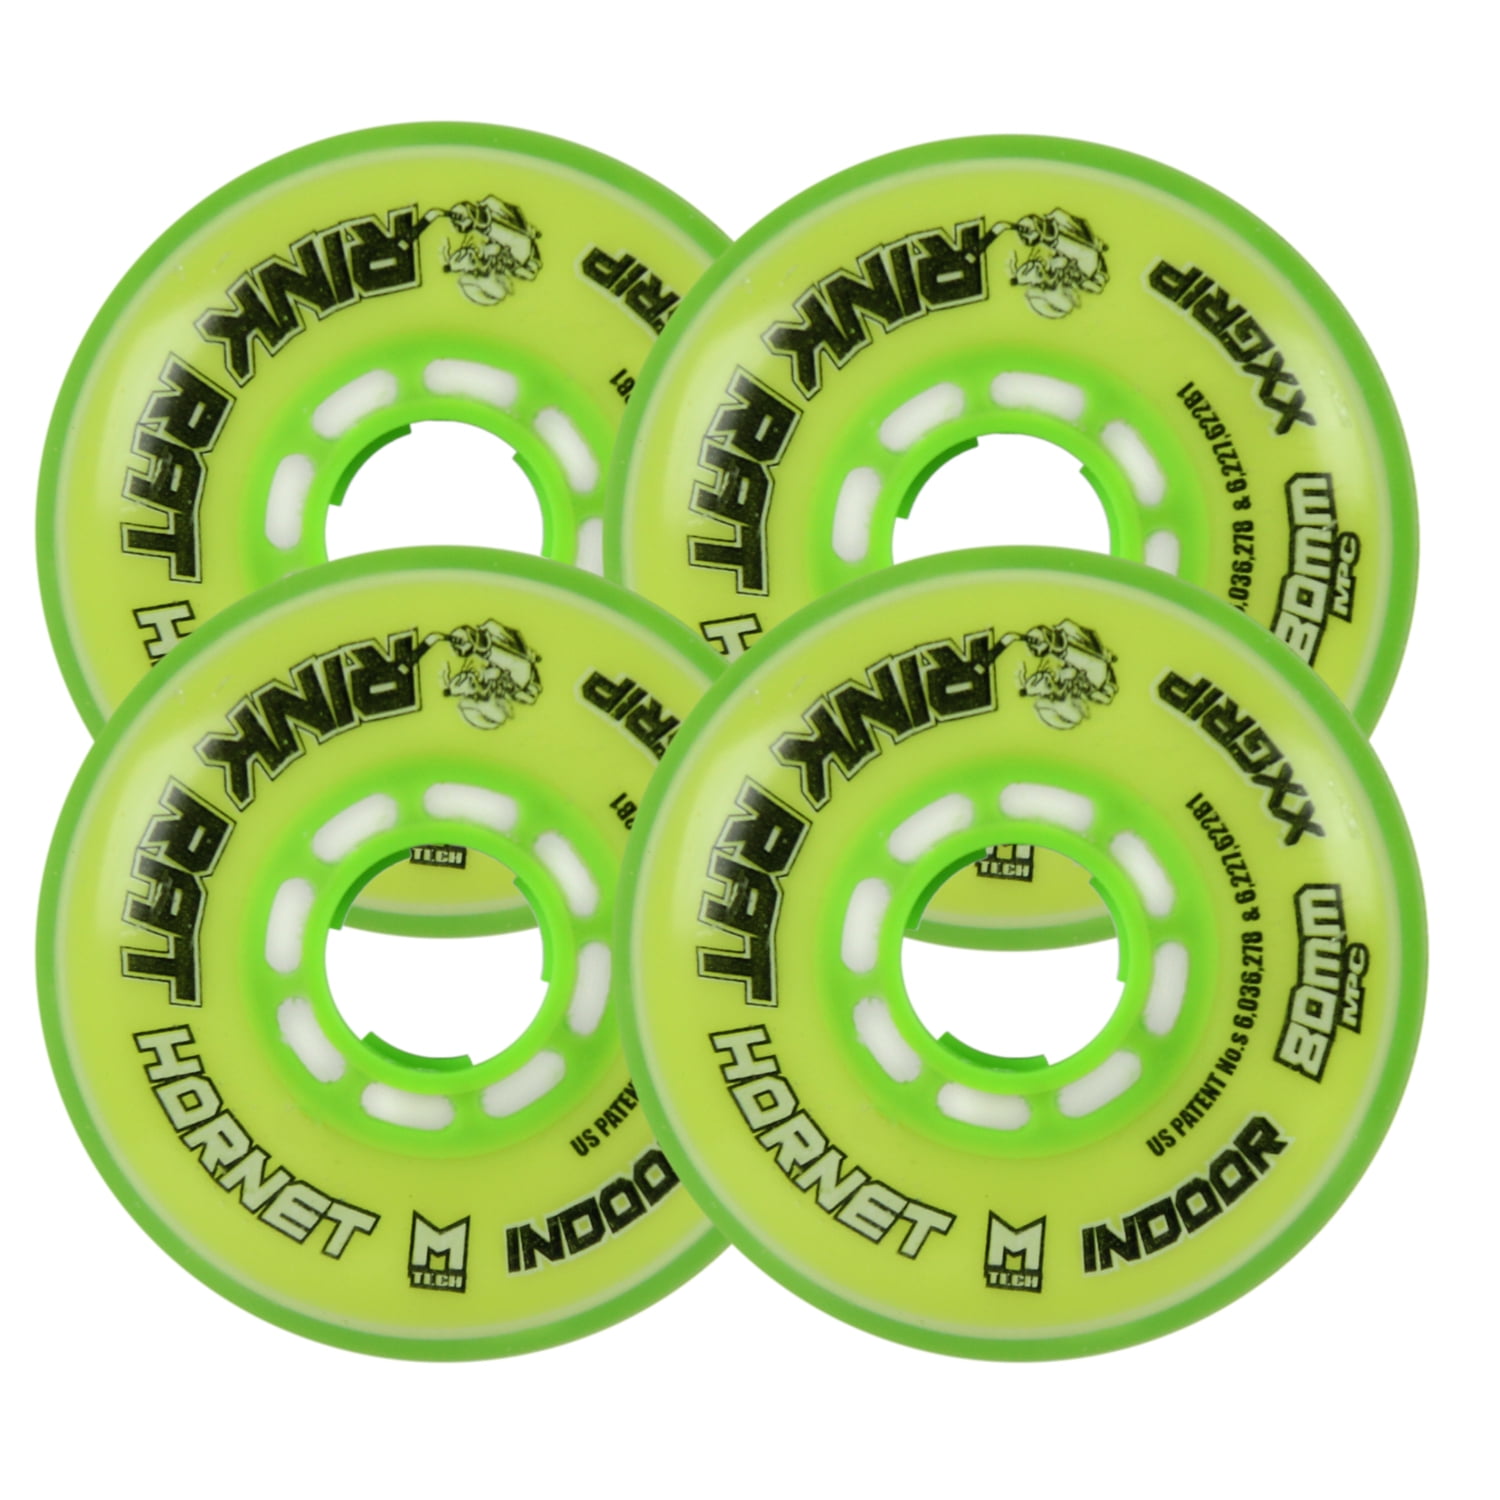 RINK RAT Wheels 80mm 78a HORNET XX 4-Pack Yellow/Green Inline Indoor Hockey